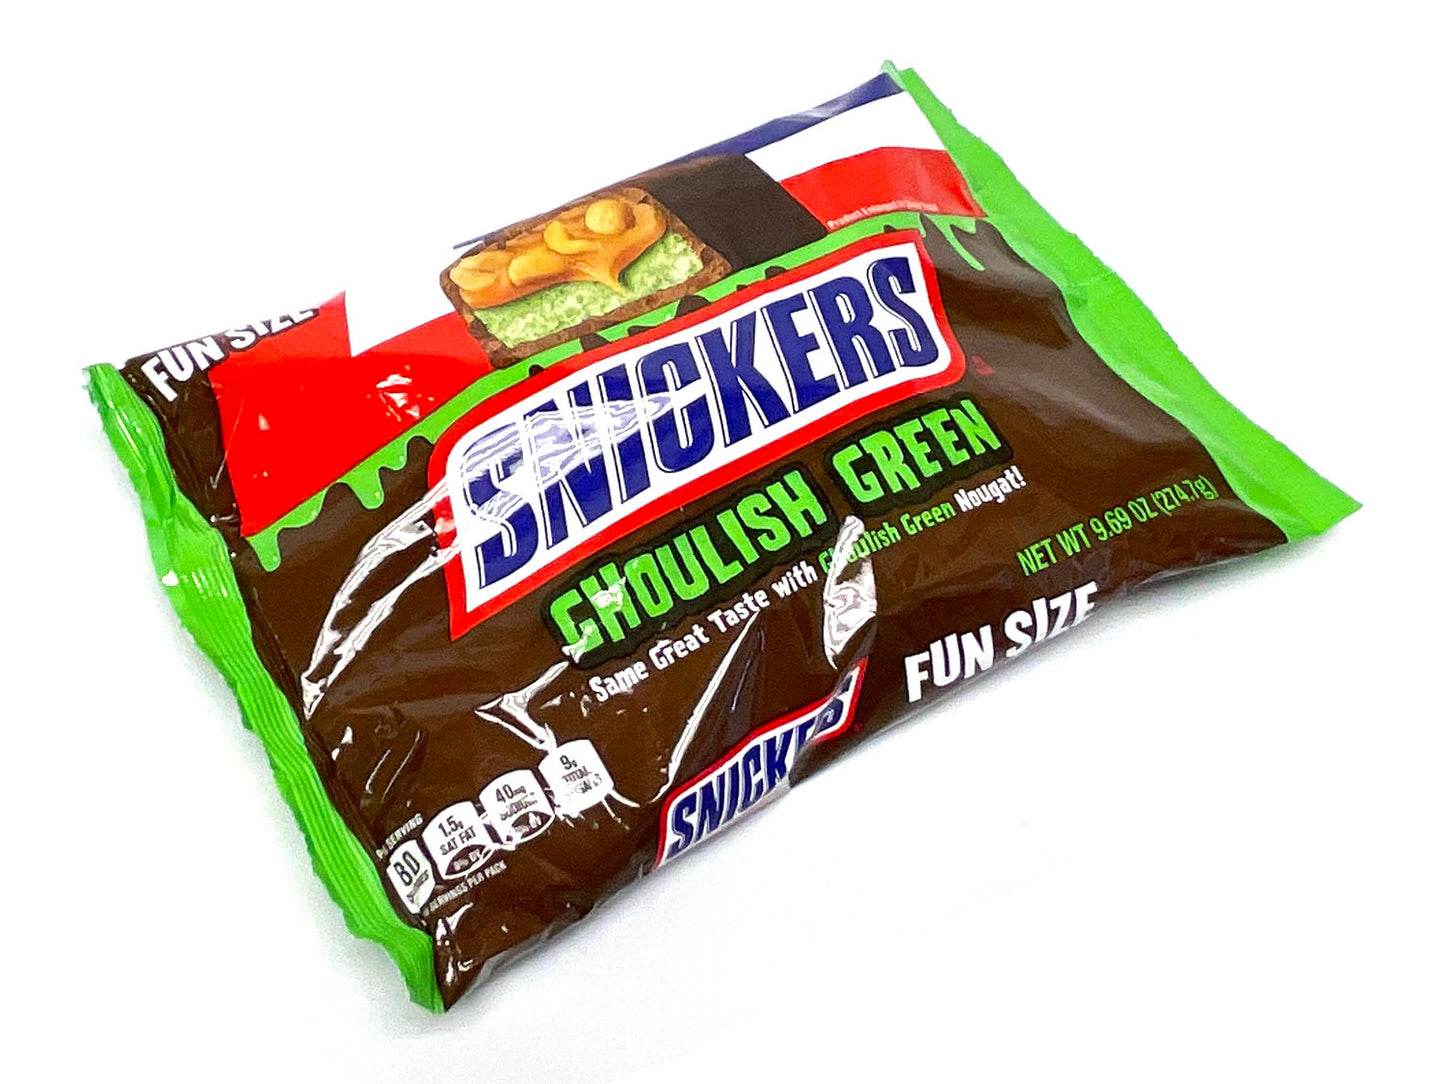 Snickers Ghoulish Green - Fun Size - 9.69 oz bag